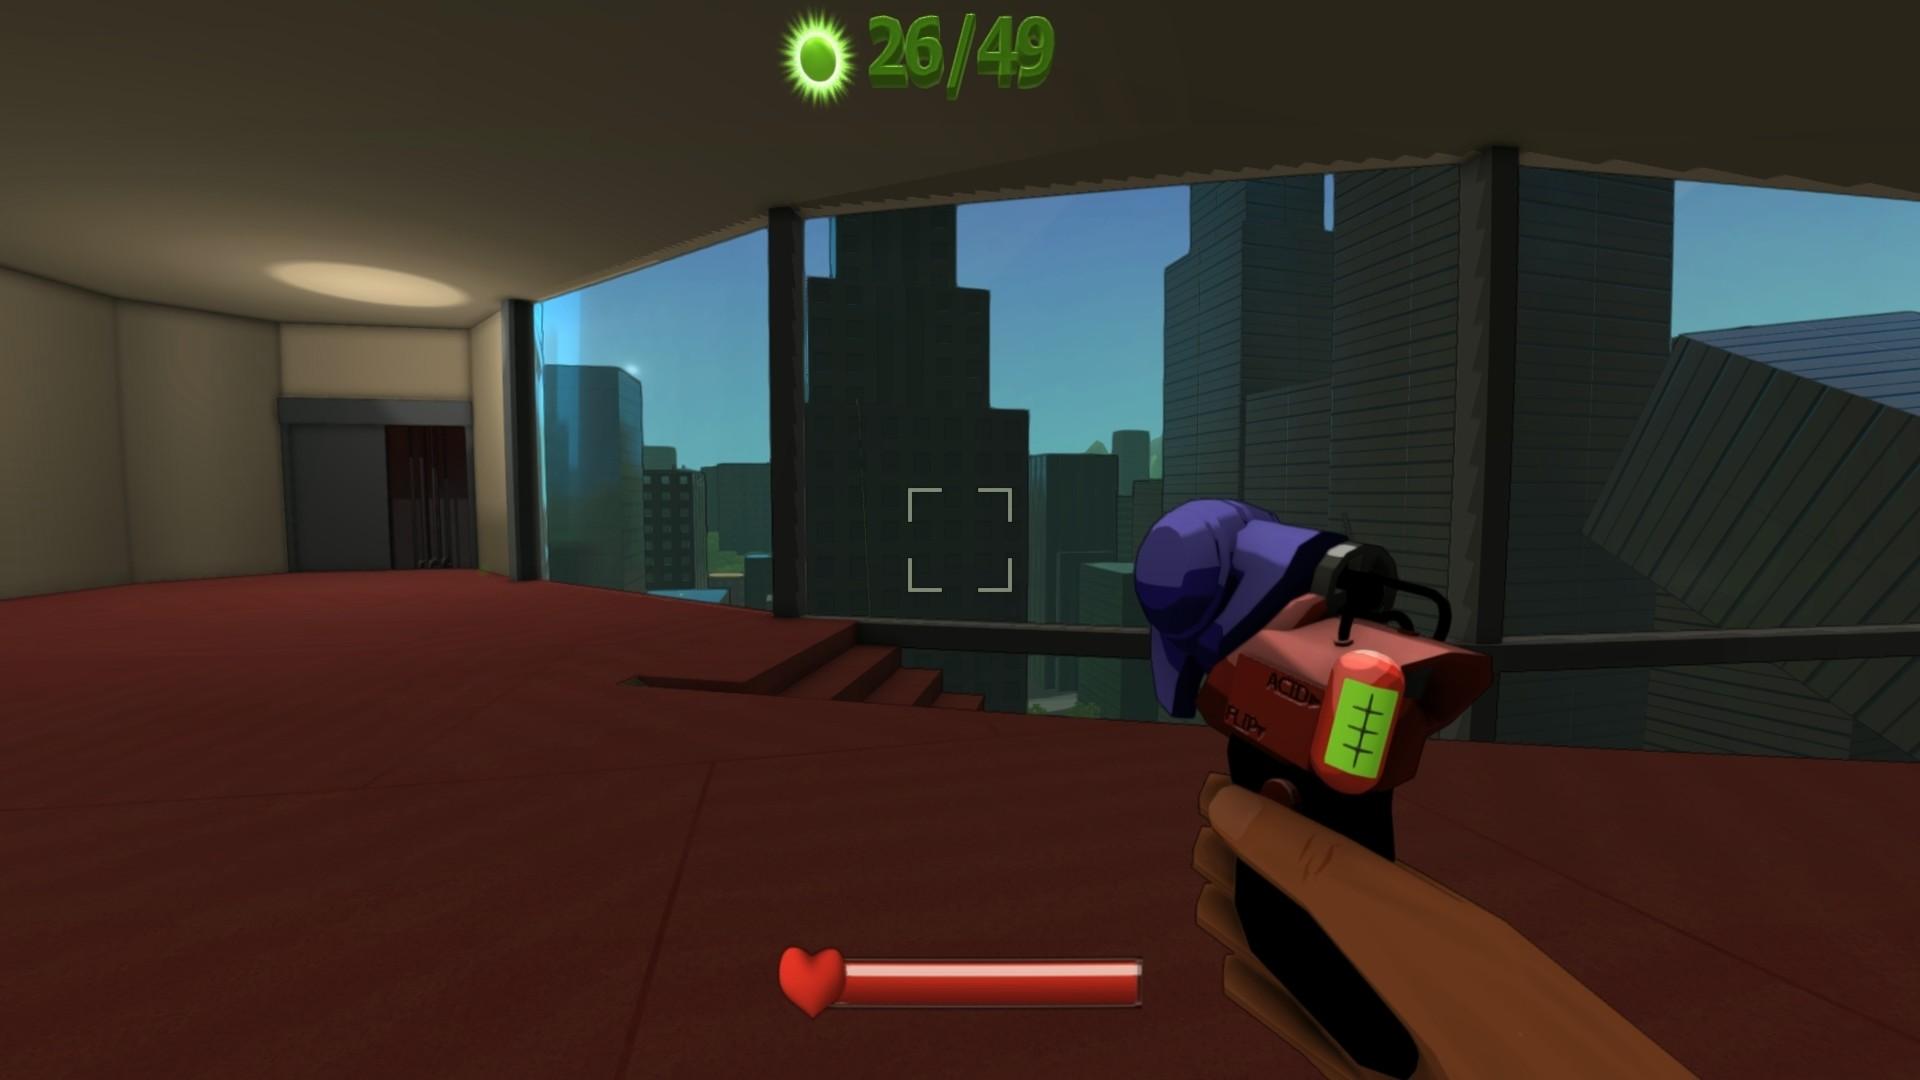 Screenshot №4 from game Acid Flip